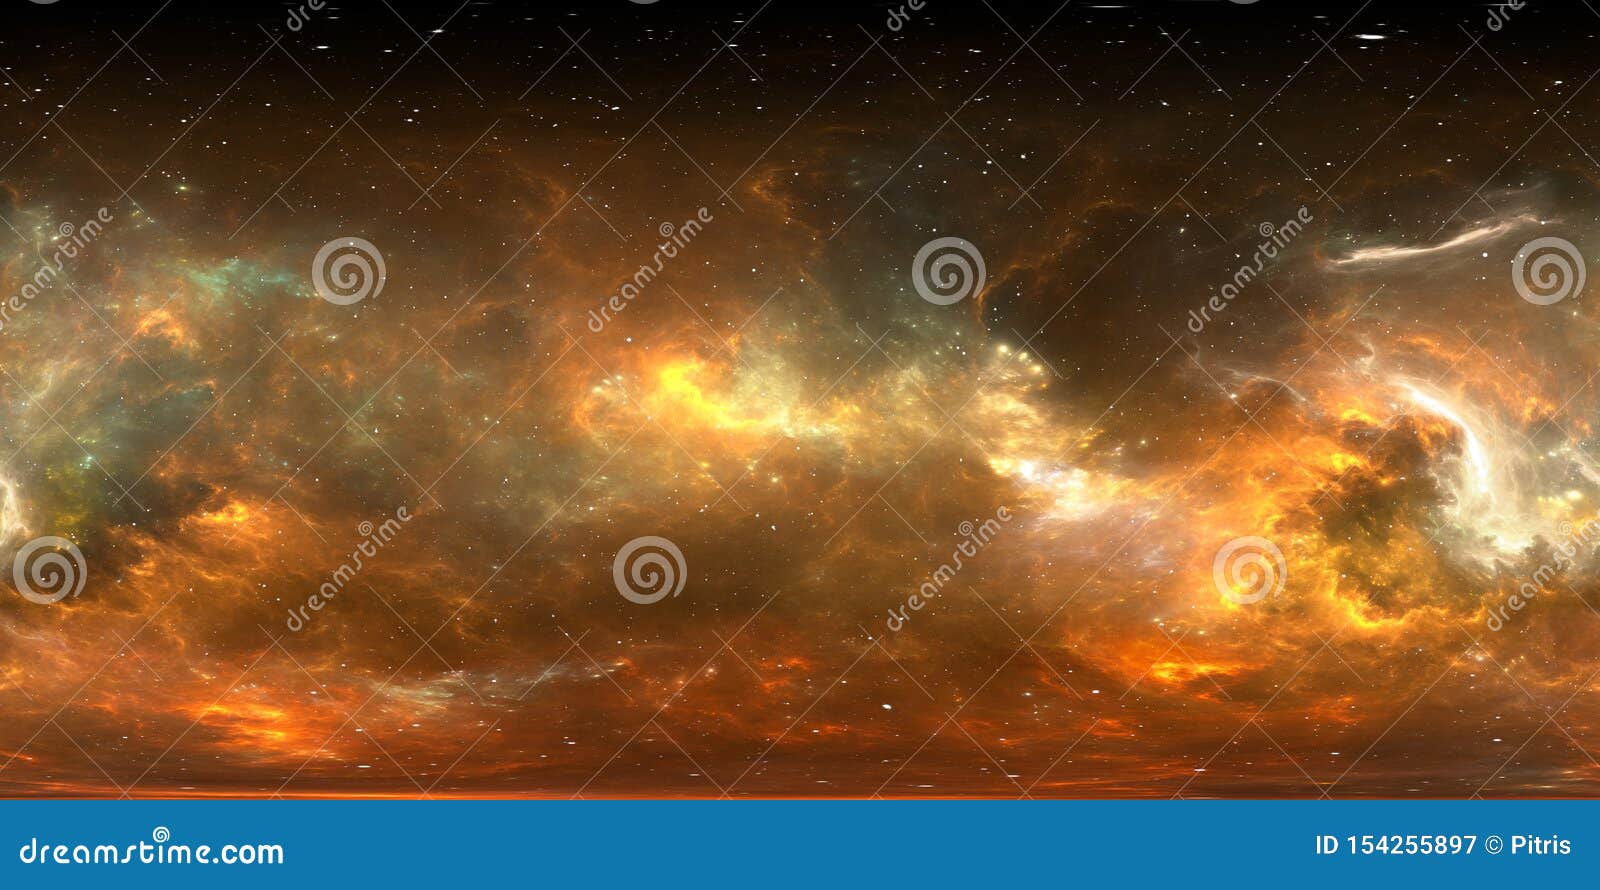 360 degree stellar system and gas nebula. panorama, environment 360 hdri map. equirectangular projection, spherical panorama